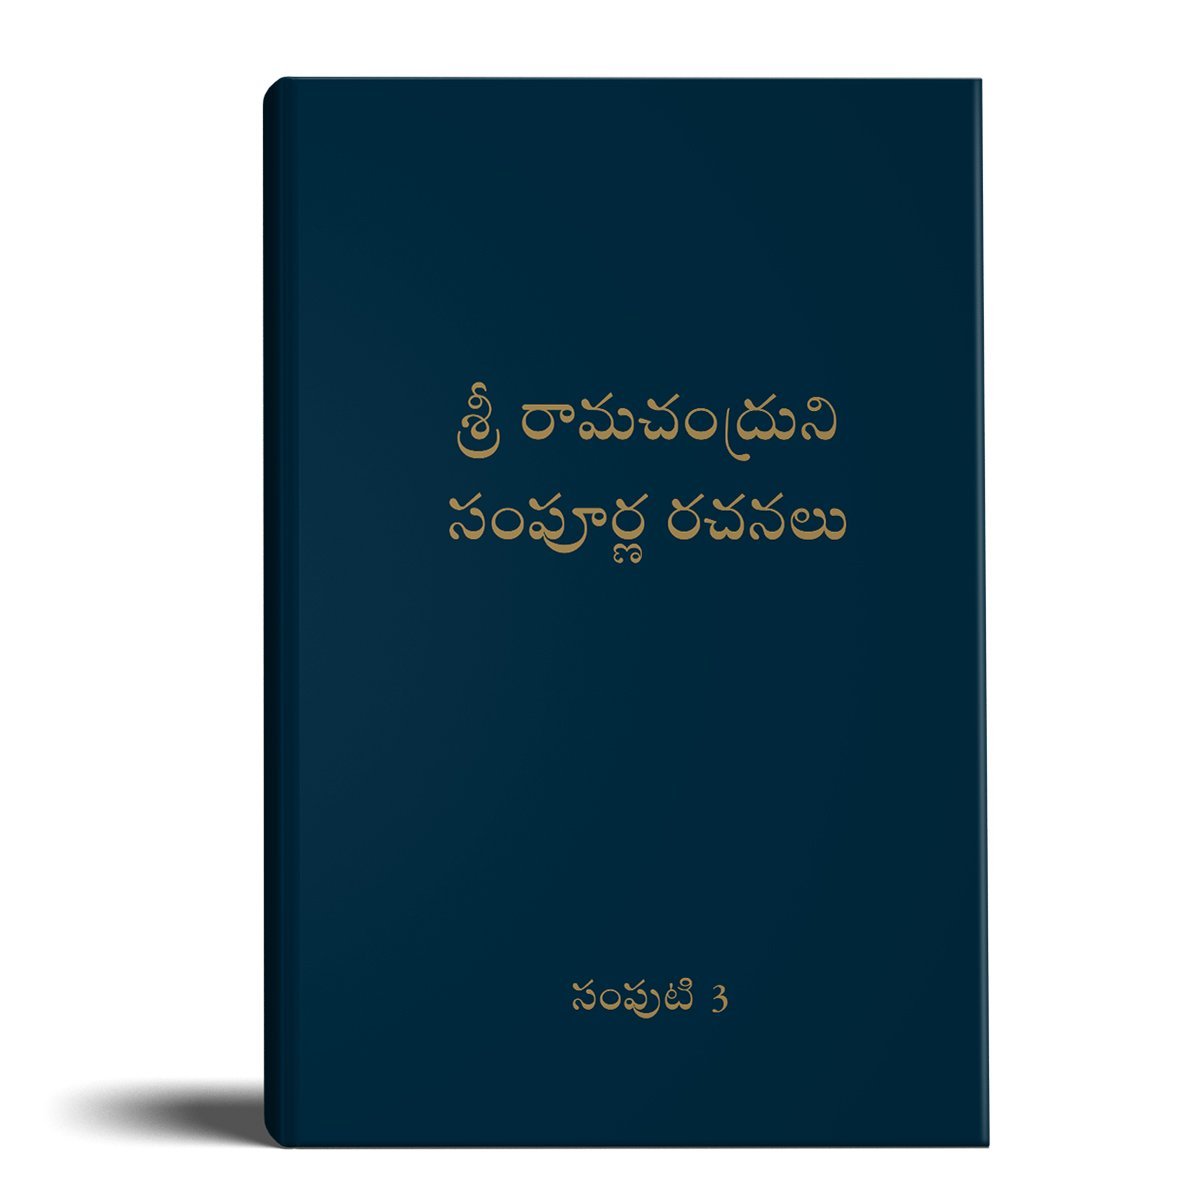 Complete Works of Ram Chandra (Babuji) - Volume 3 - hfnl!fe